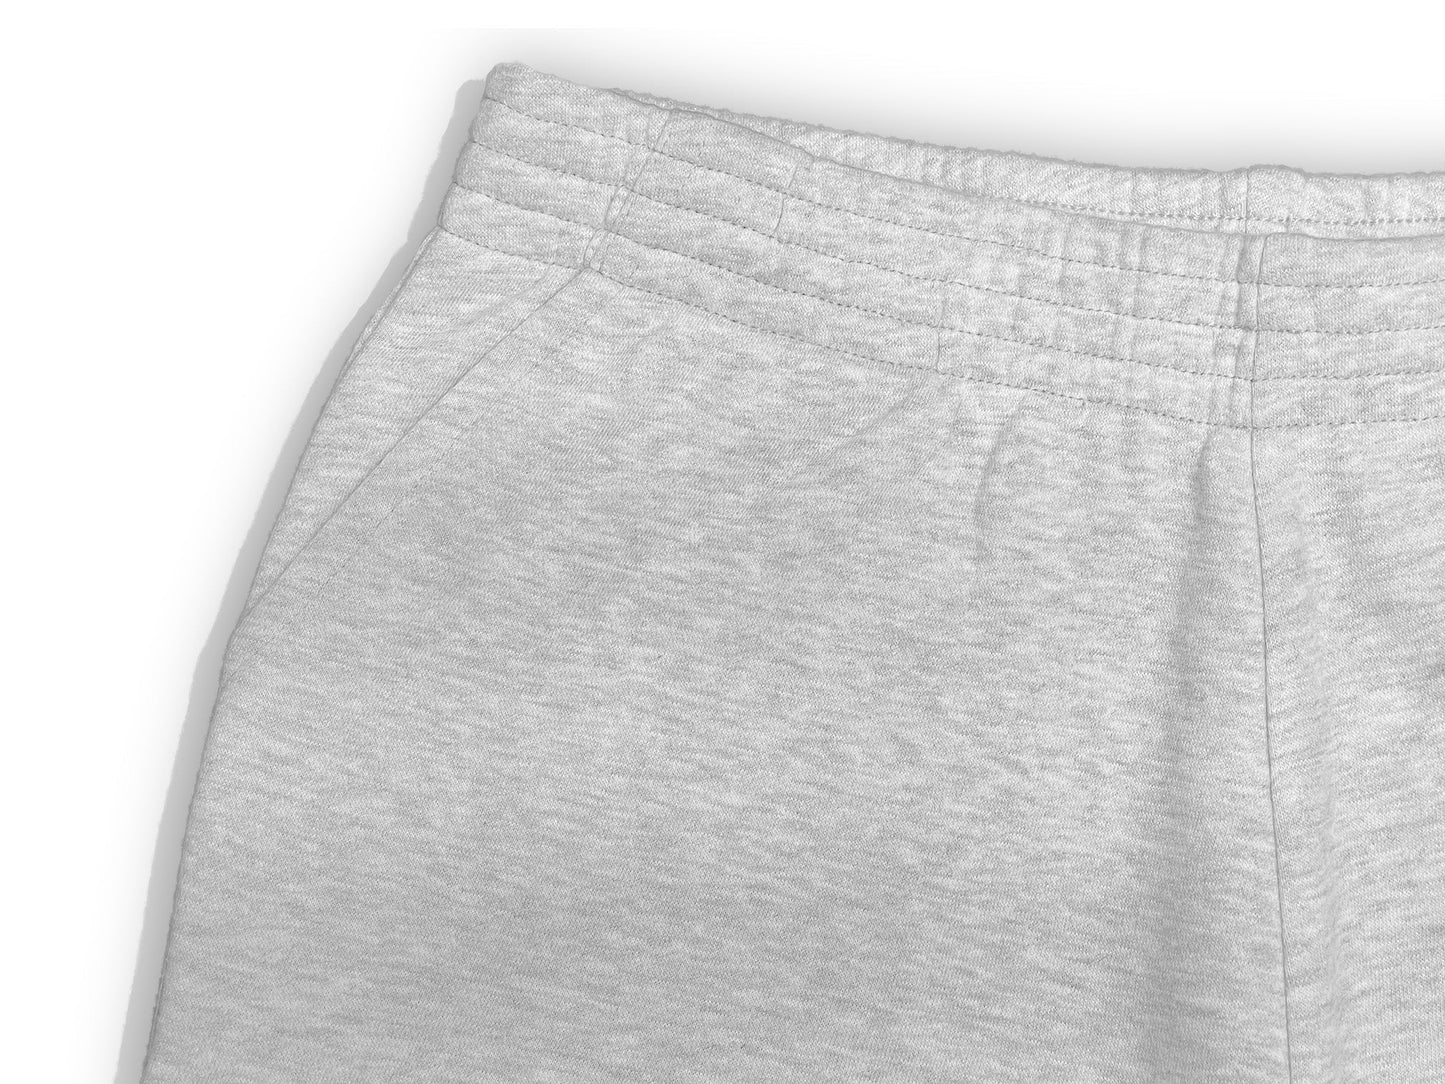 HERO - 7020 3’ Sweatshorts - Lavender Shorts